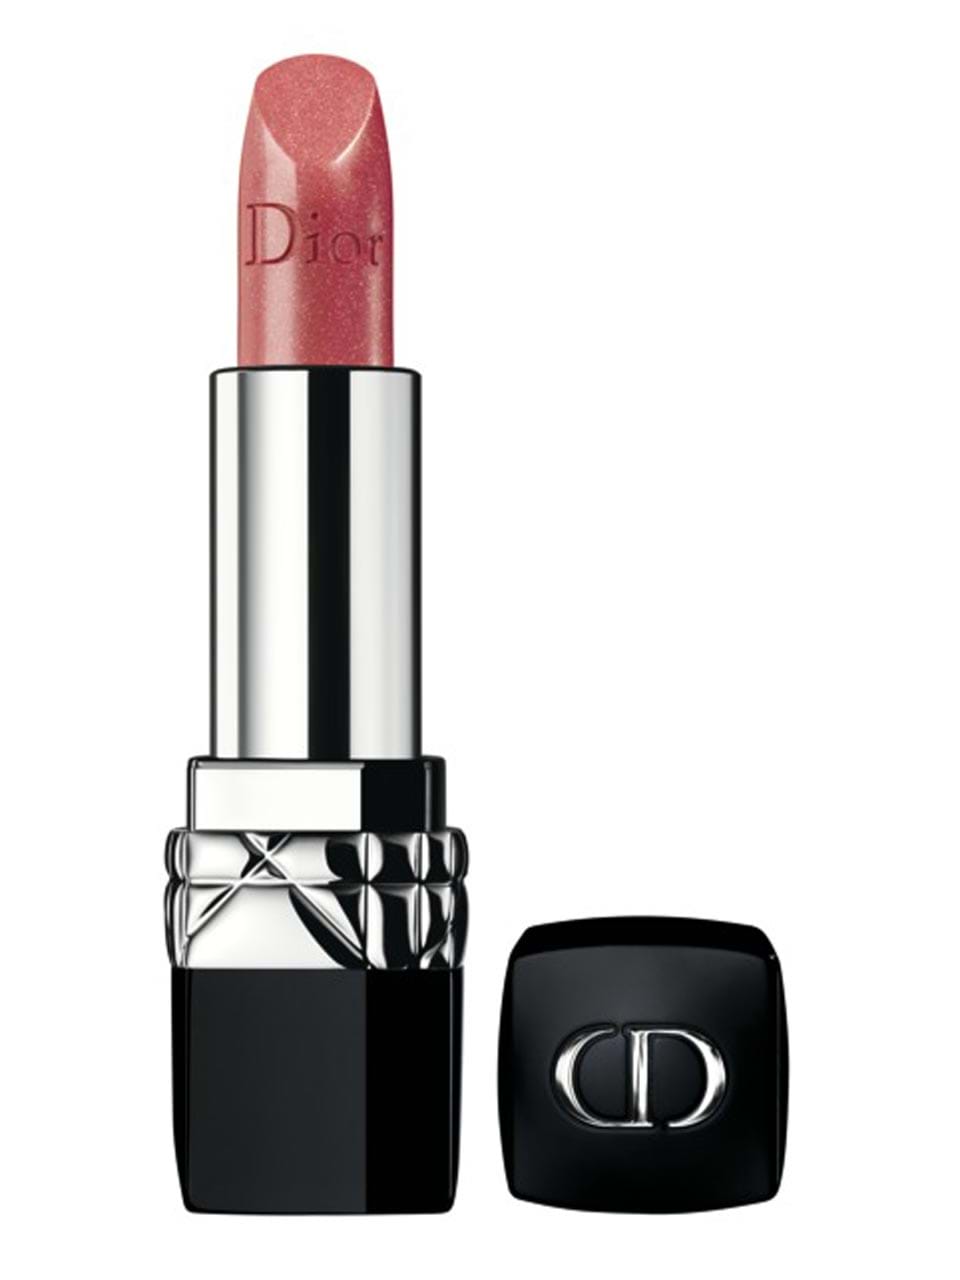 dior 365 lipstick